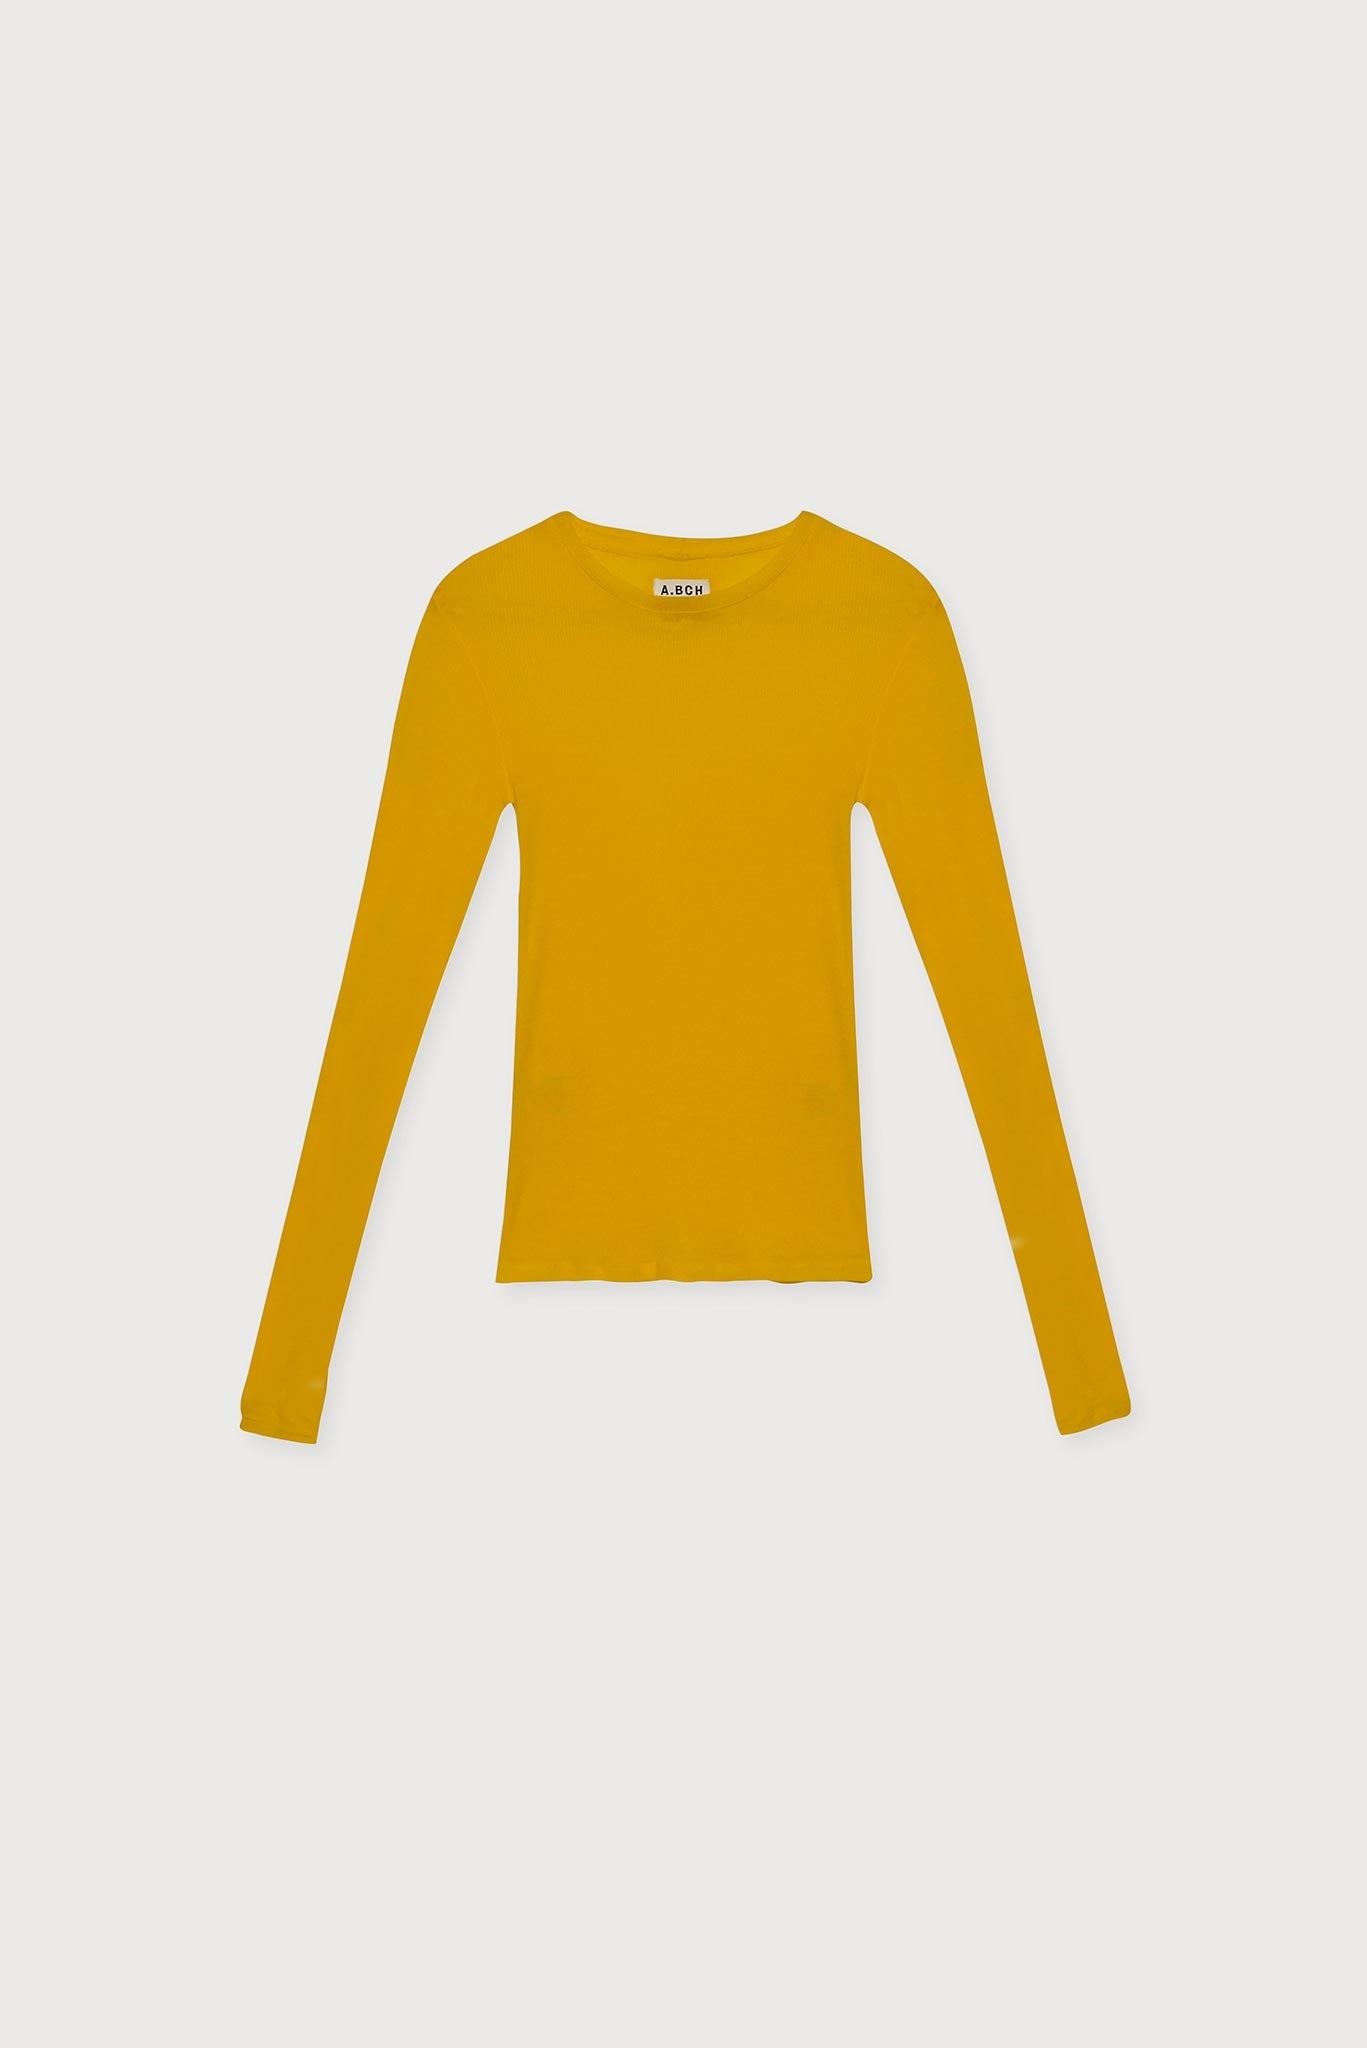 A.BCH A.34 Marigold Long Sleeve Thermal T-Shirt in Australian Merino